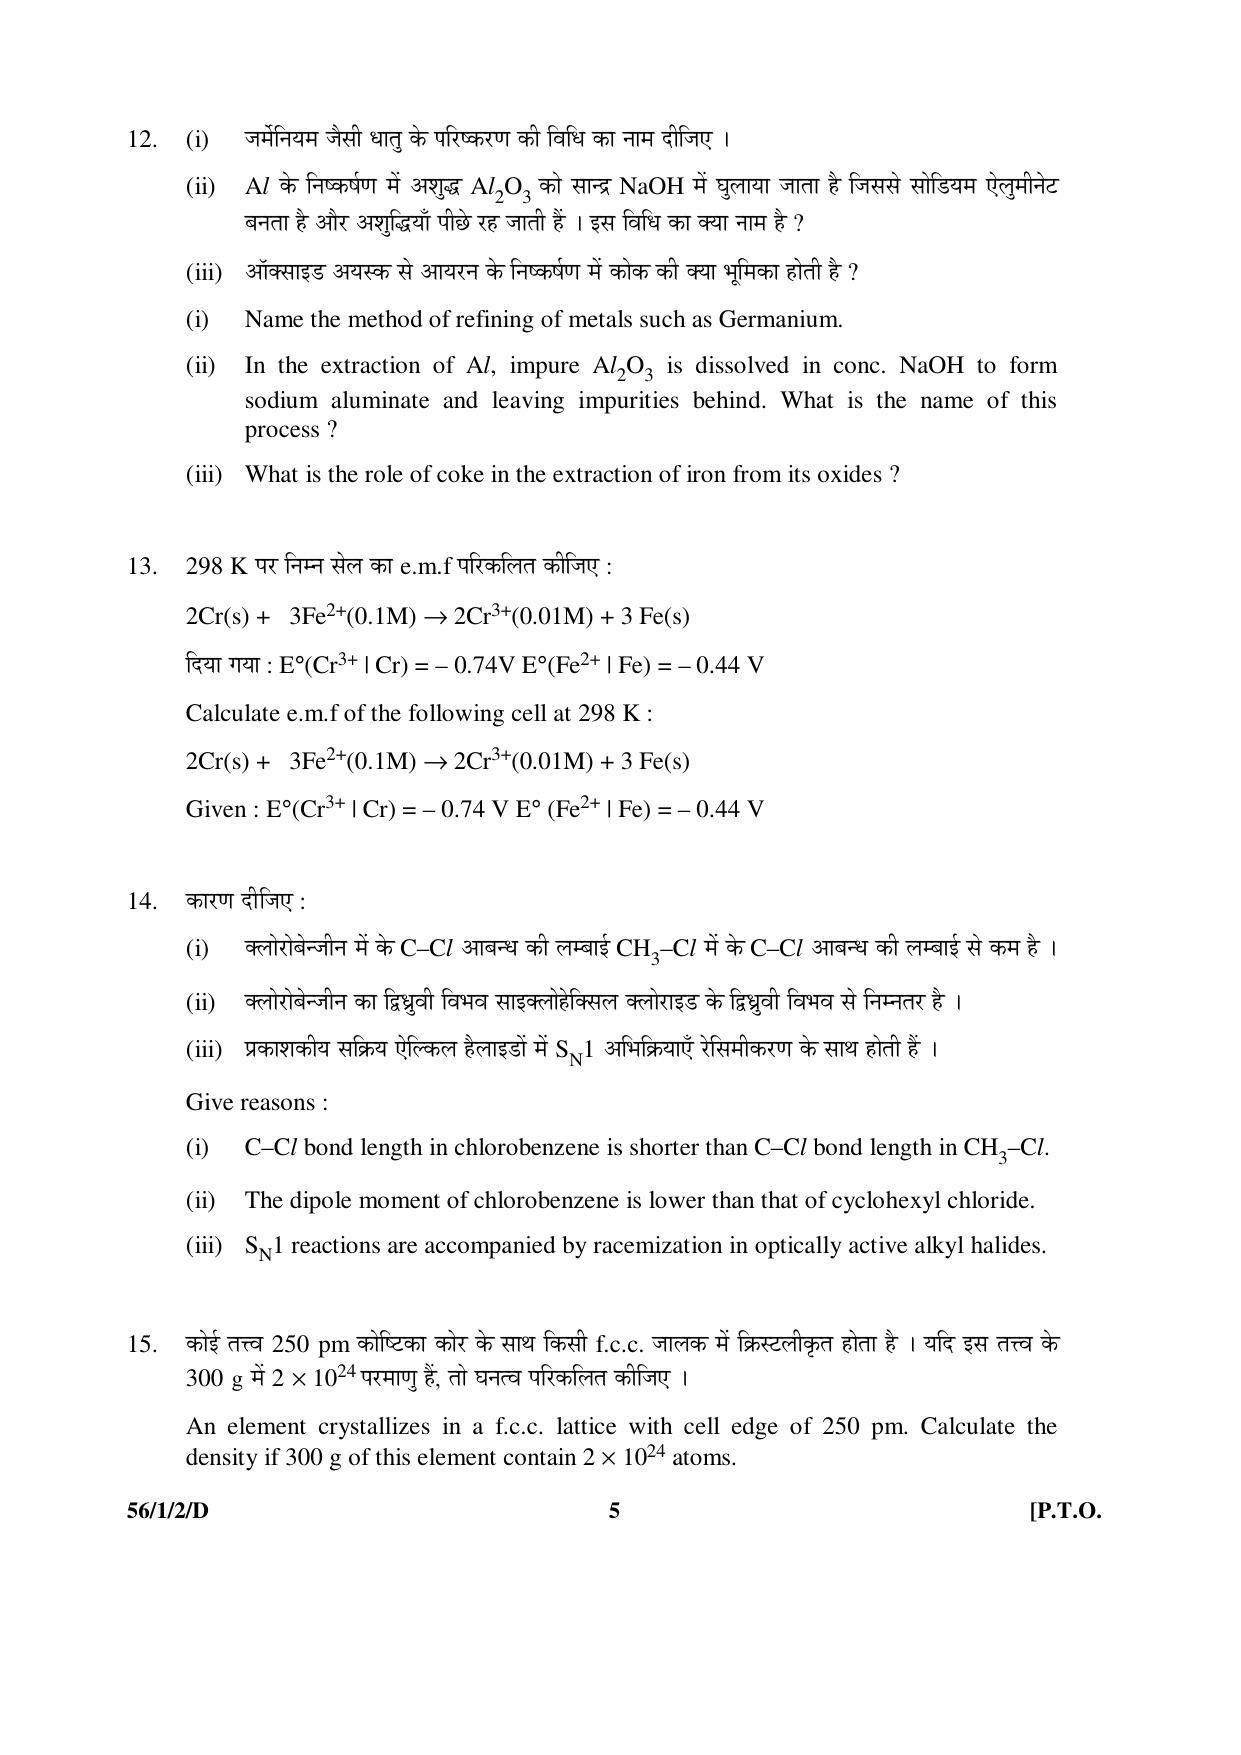 CBSE Class 12 56-1-2-D CHEMISTRY 2016 Question Paper - Page 5